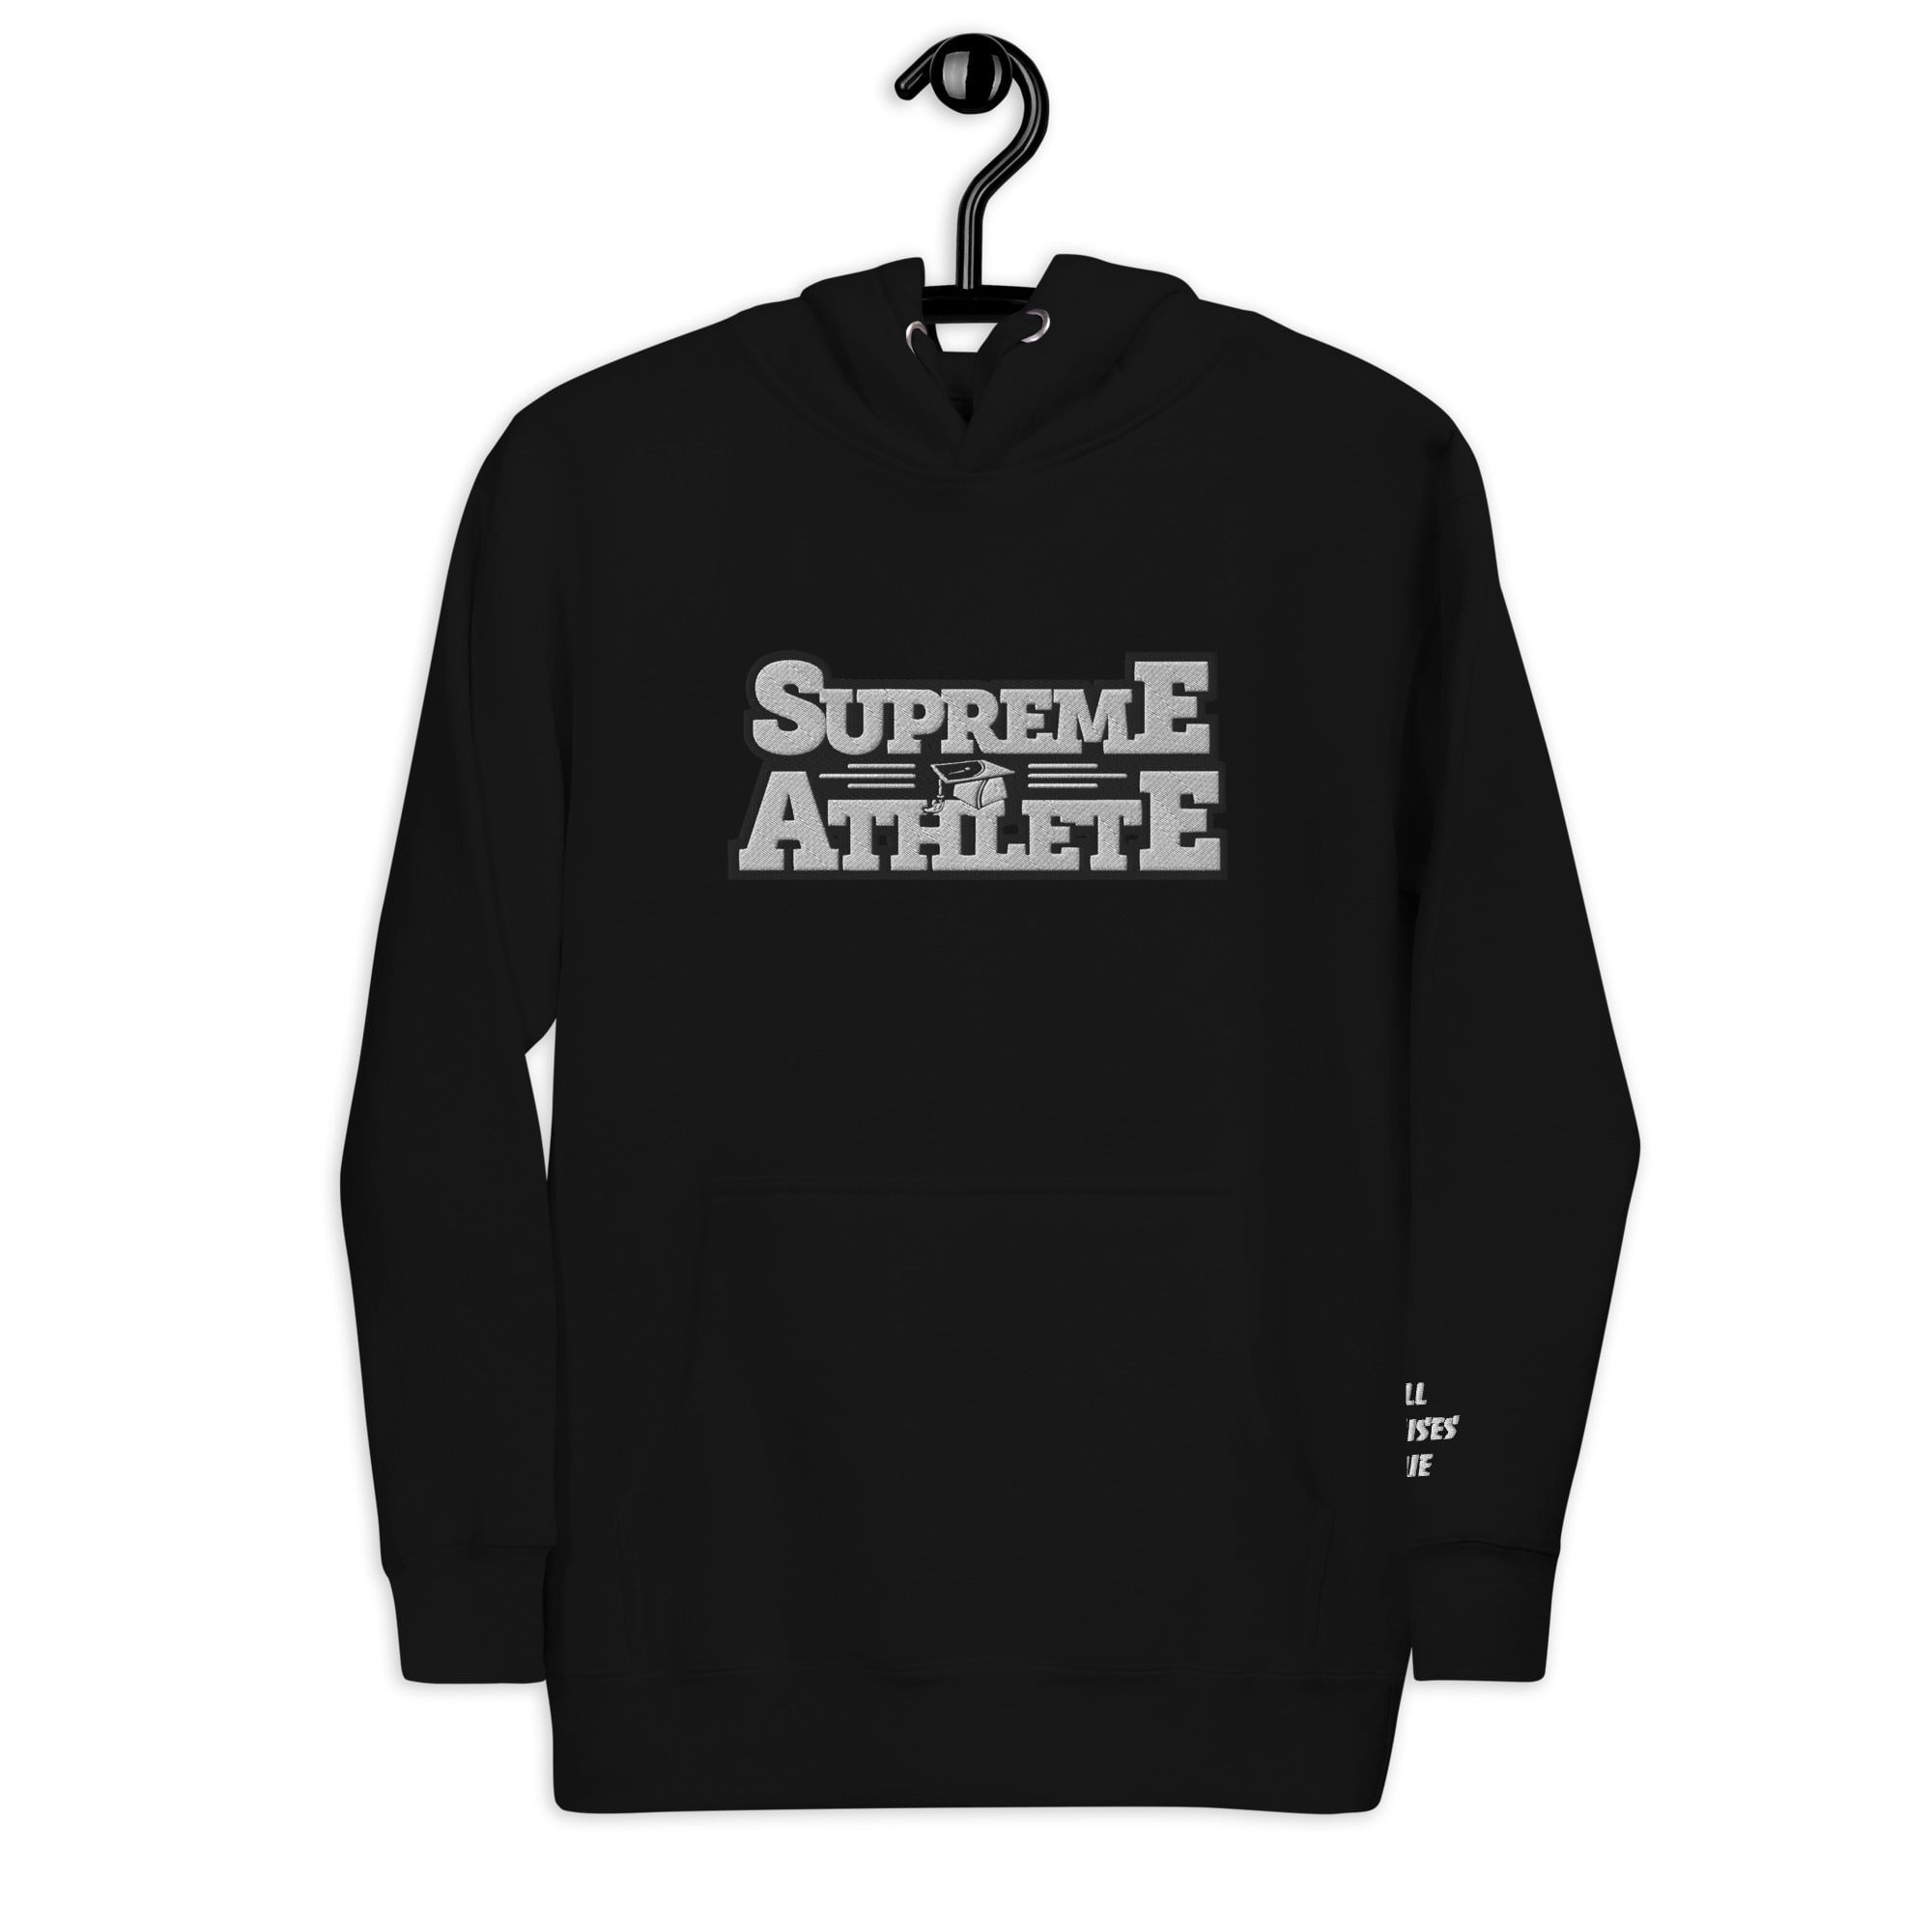 Supreme Athlete Unisex Hoodie Supreme Athlete Black S 